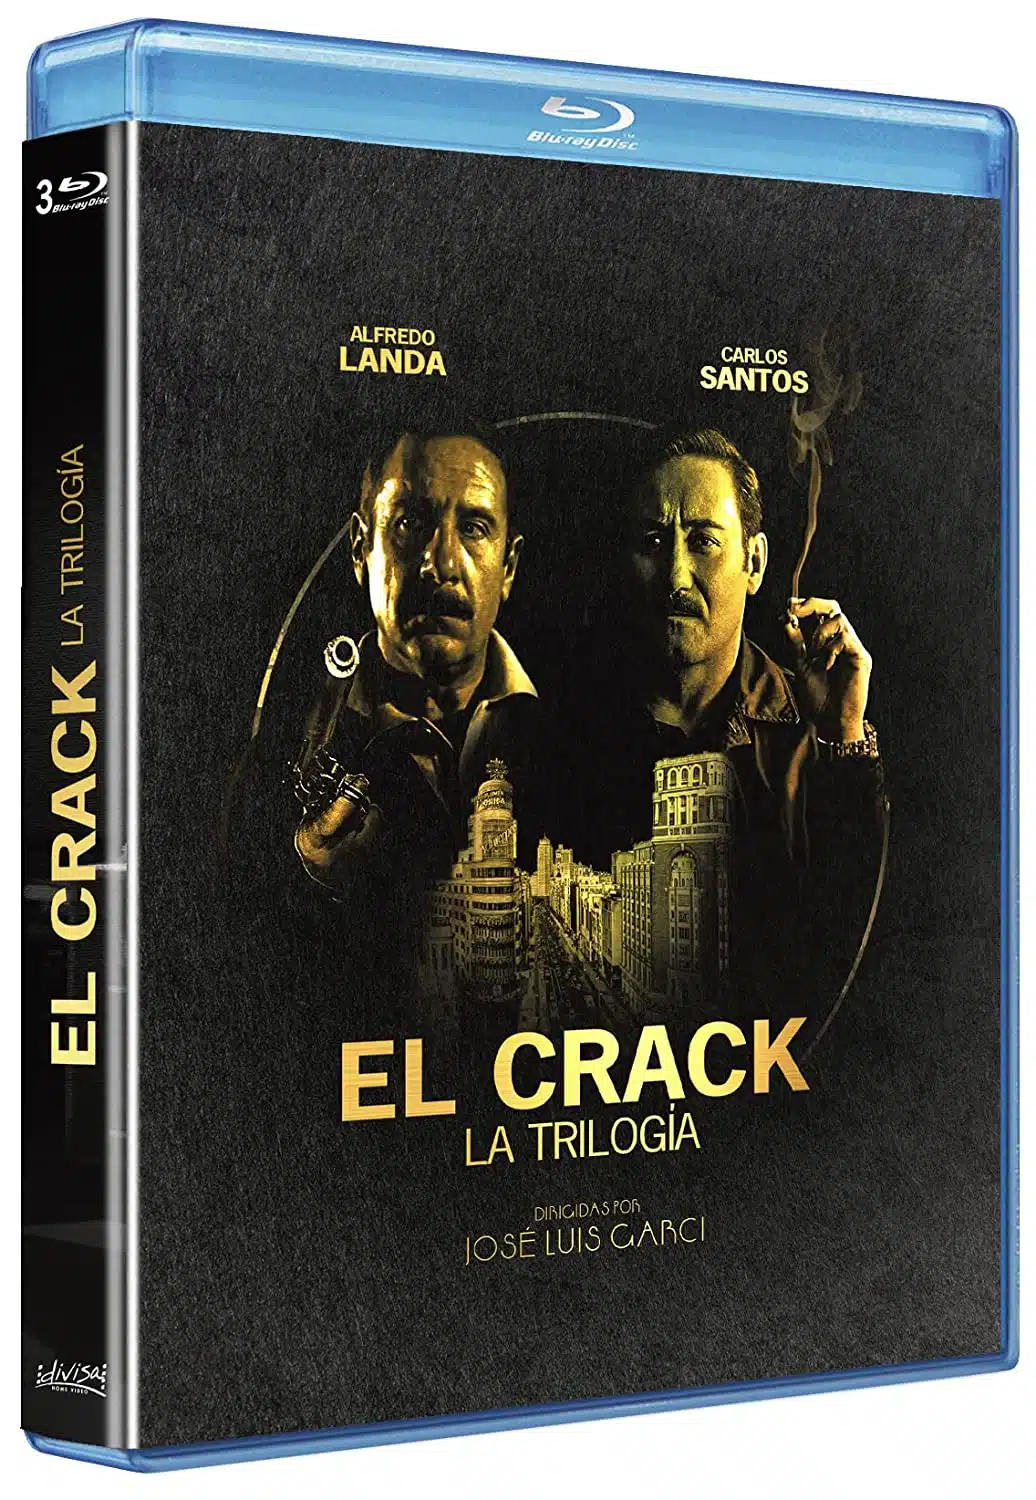 El Crack: La Trilogia (Blu-ray) (3 discos)